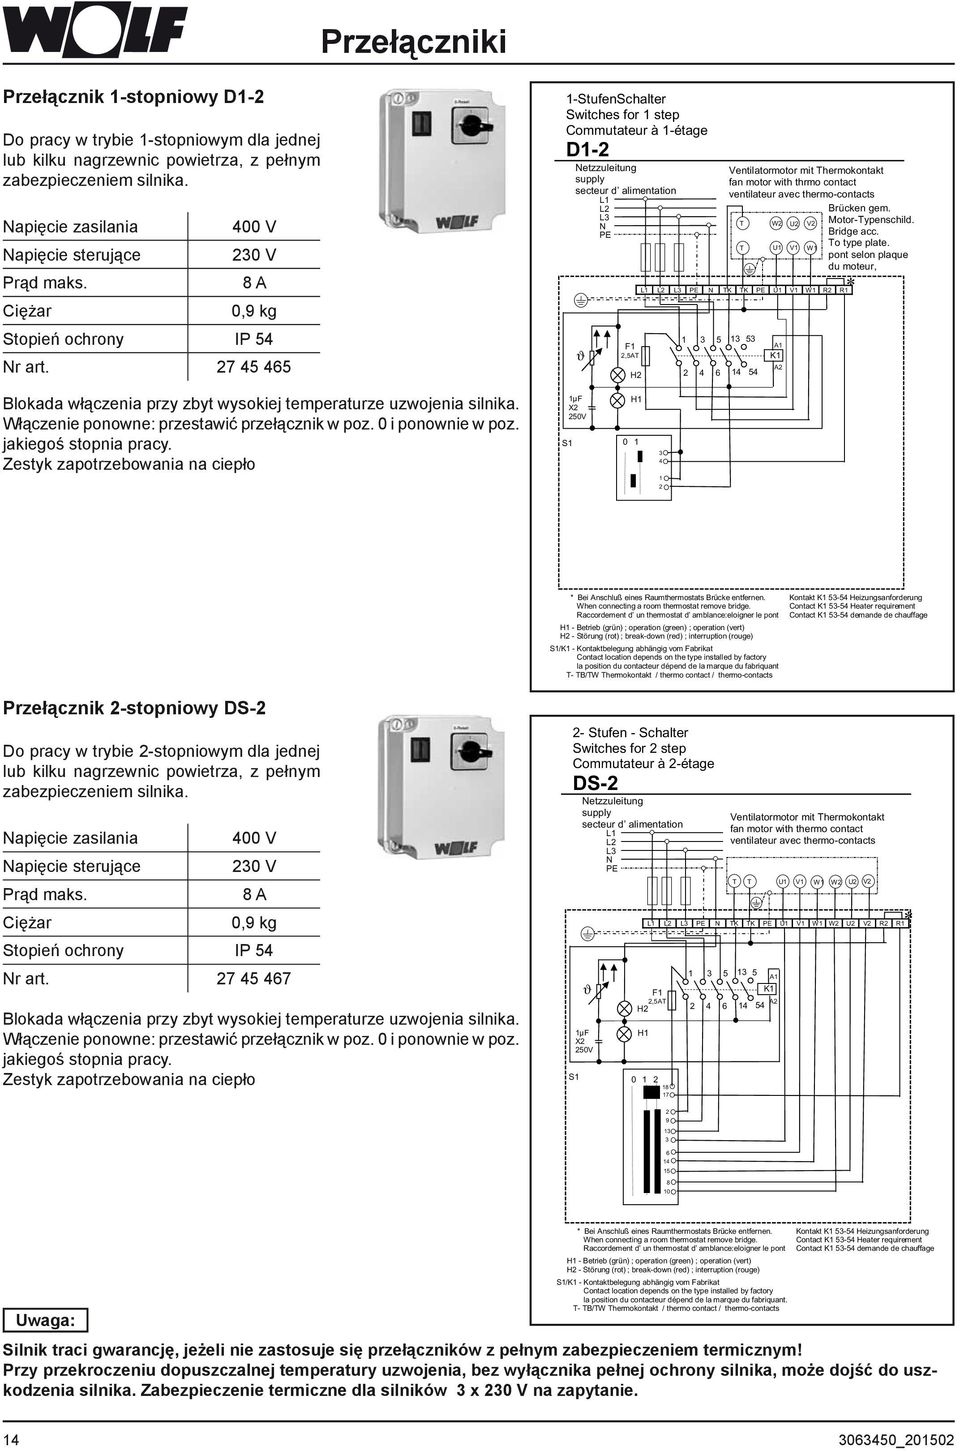 7 45 465 -StufenSchalter Switches for step Commutateur à -étage D- Netzzuleitung supply secteur d alimentation L L L N PE ϑ F,5AT H Ventilatormotor mit Thermokontakt fan motor with thrmo contact